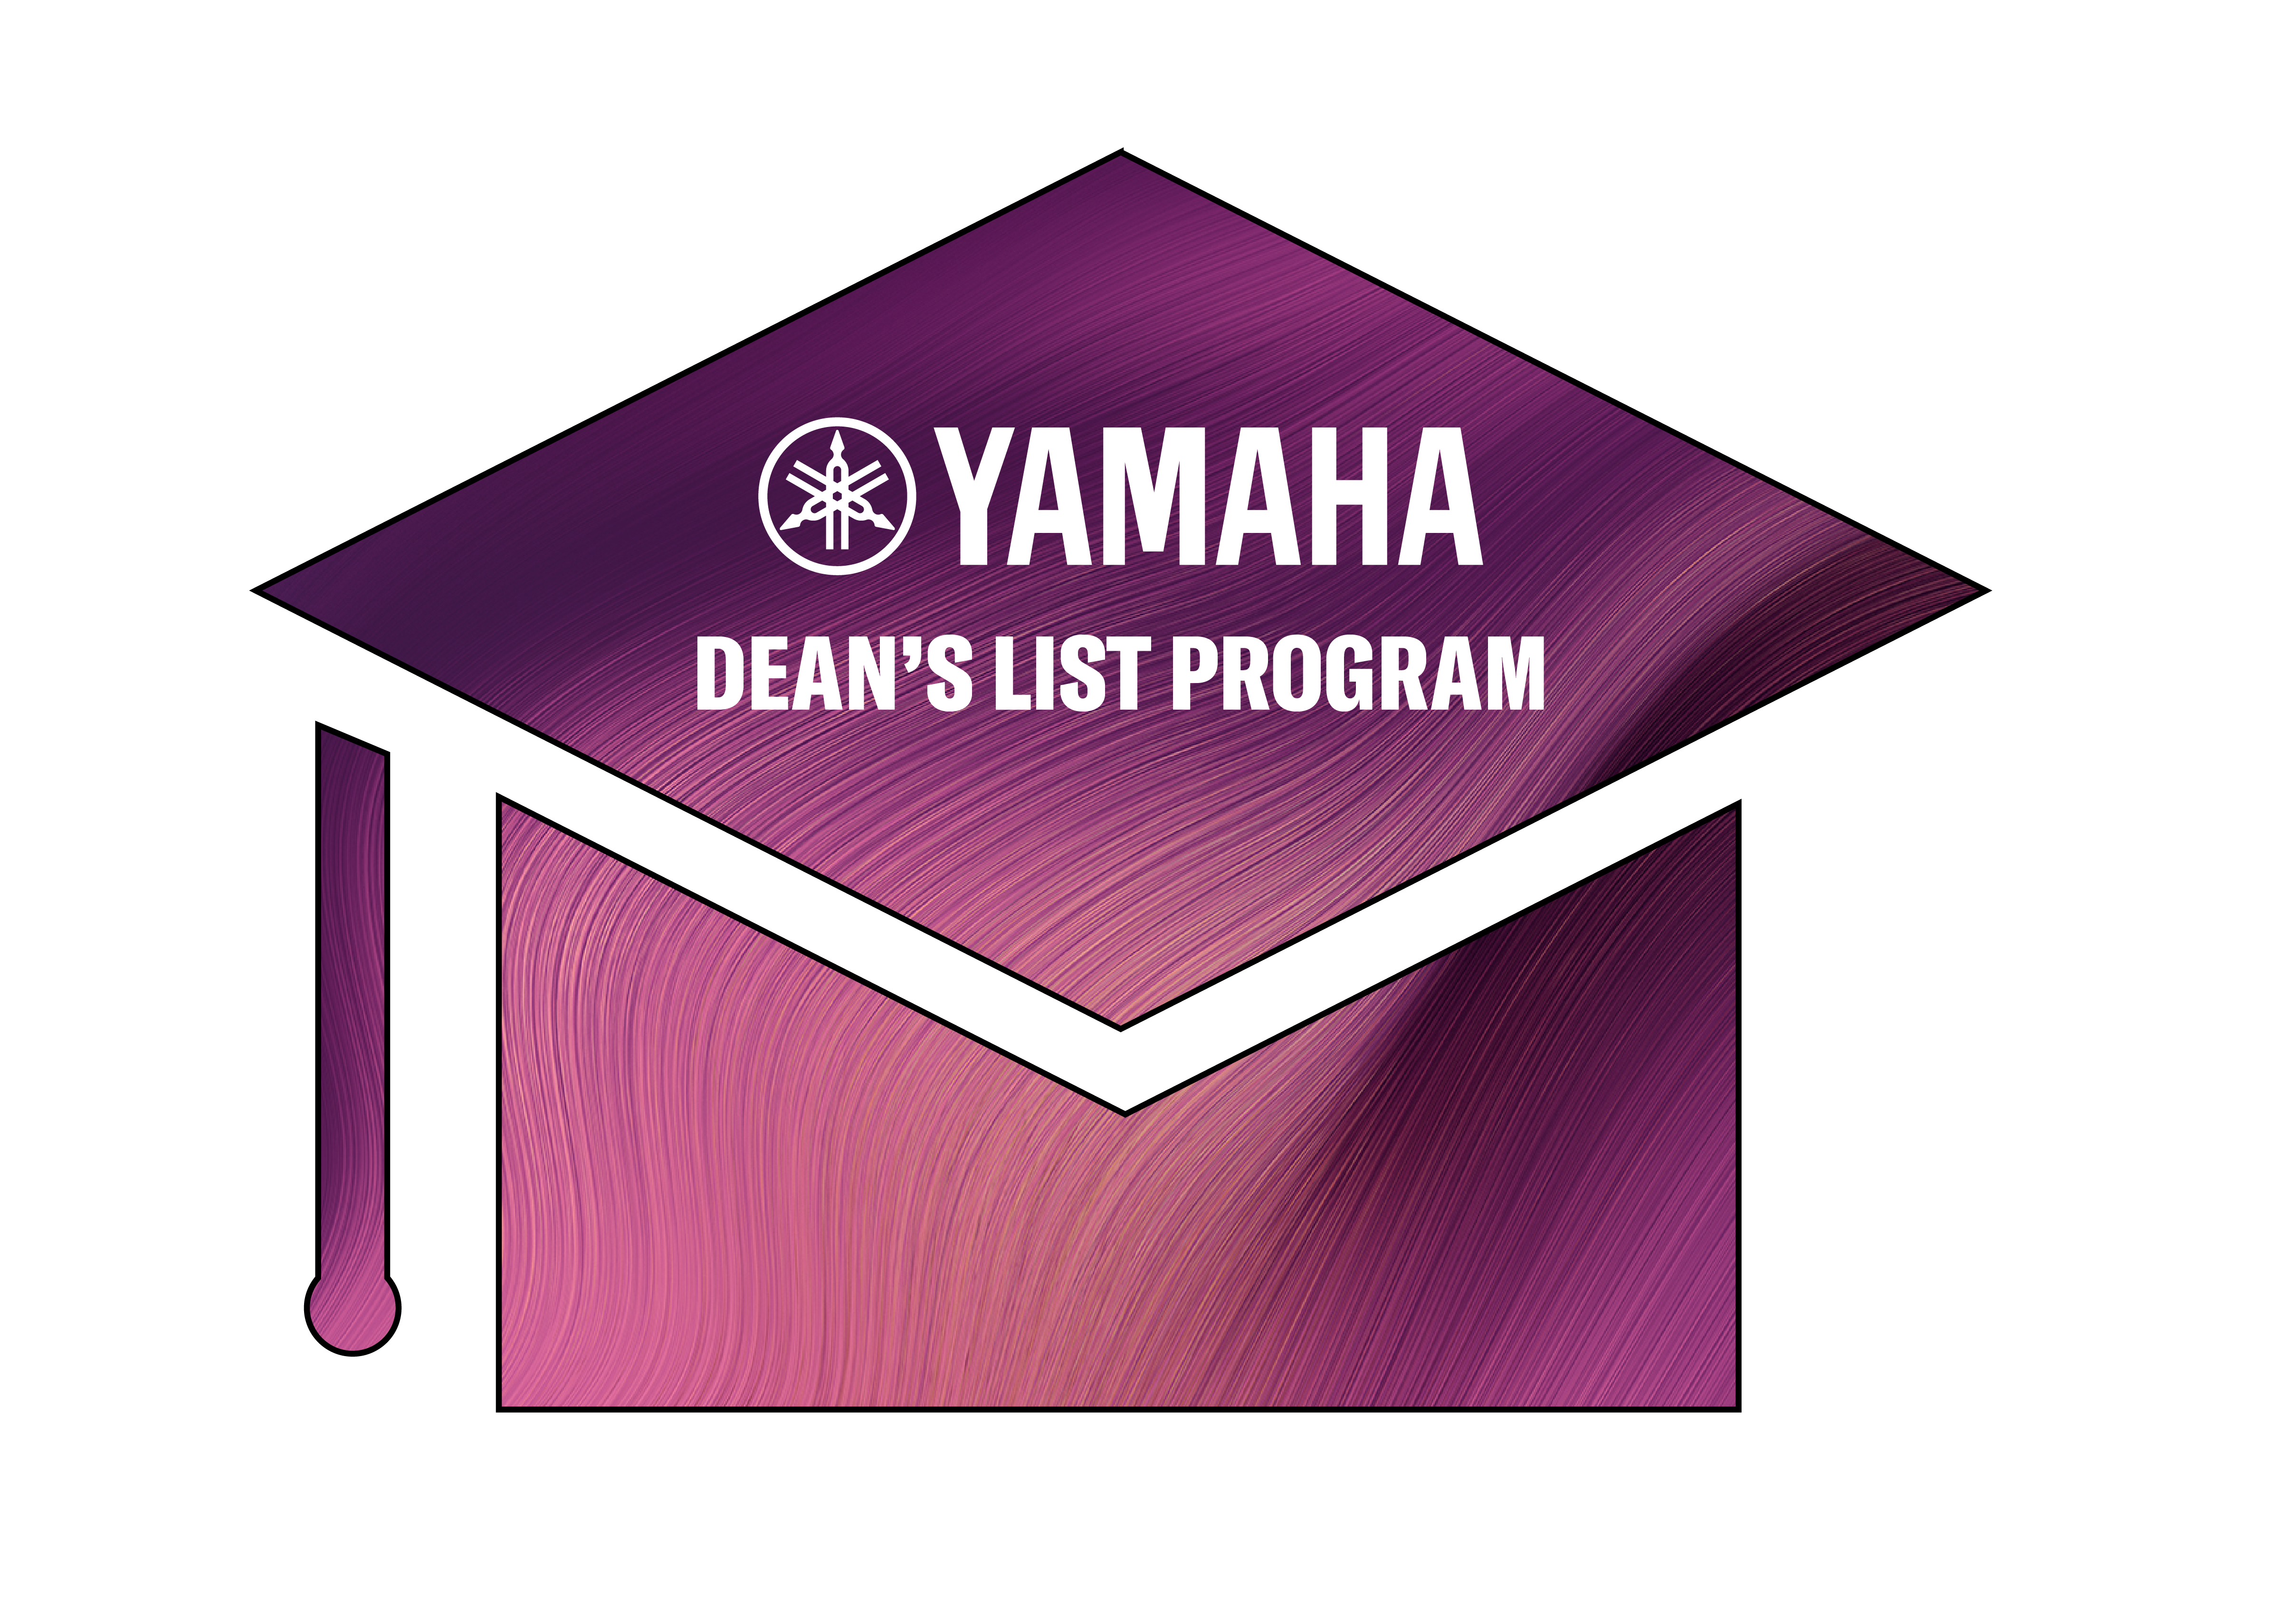 Yamaha Dean's List Program